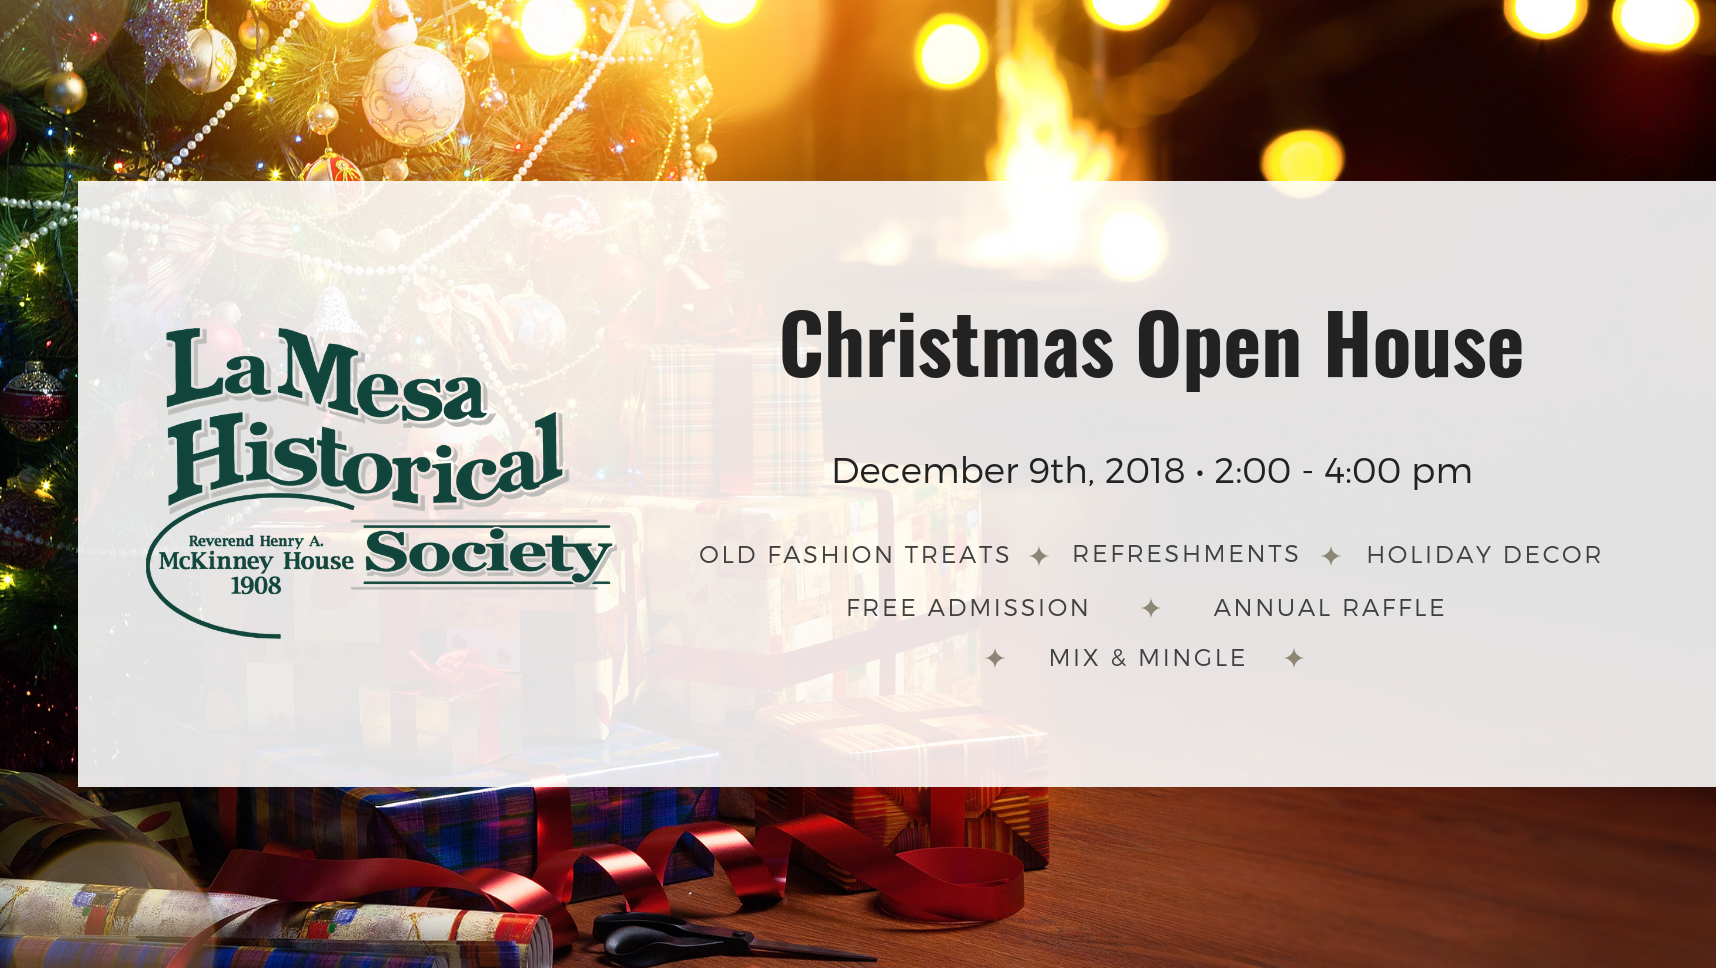 Christmas Open House Event in La Mesa